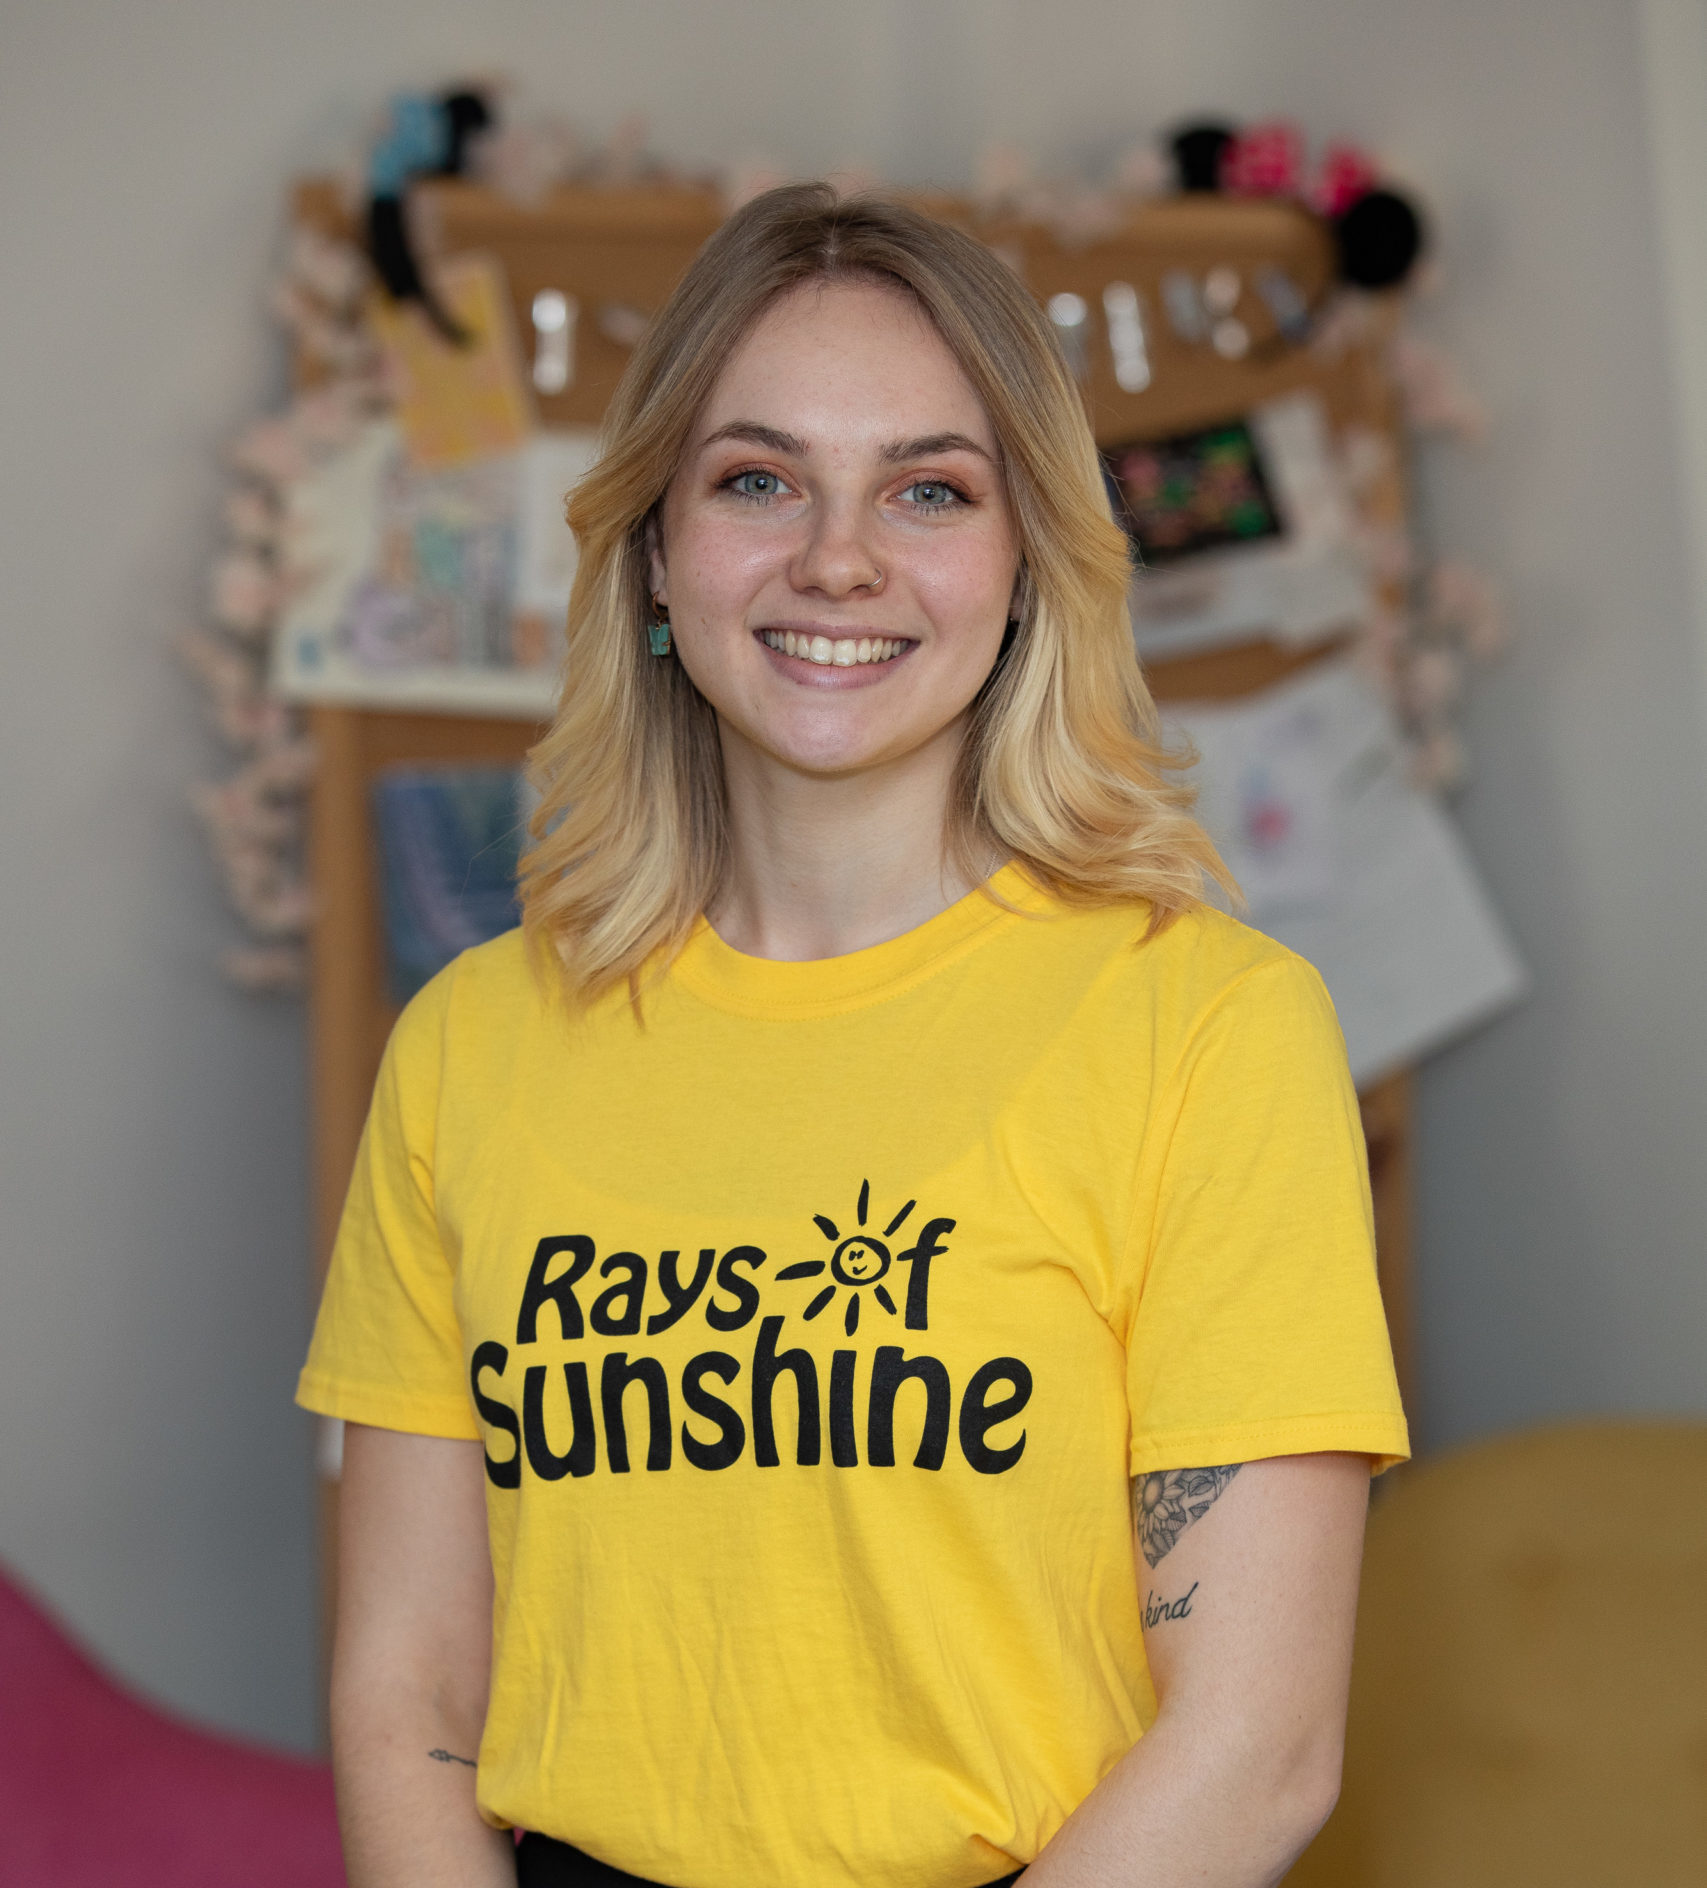 Jess is wearing a yellow Rays of Sunshine t-shirt. Jess has short blonde hair.